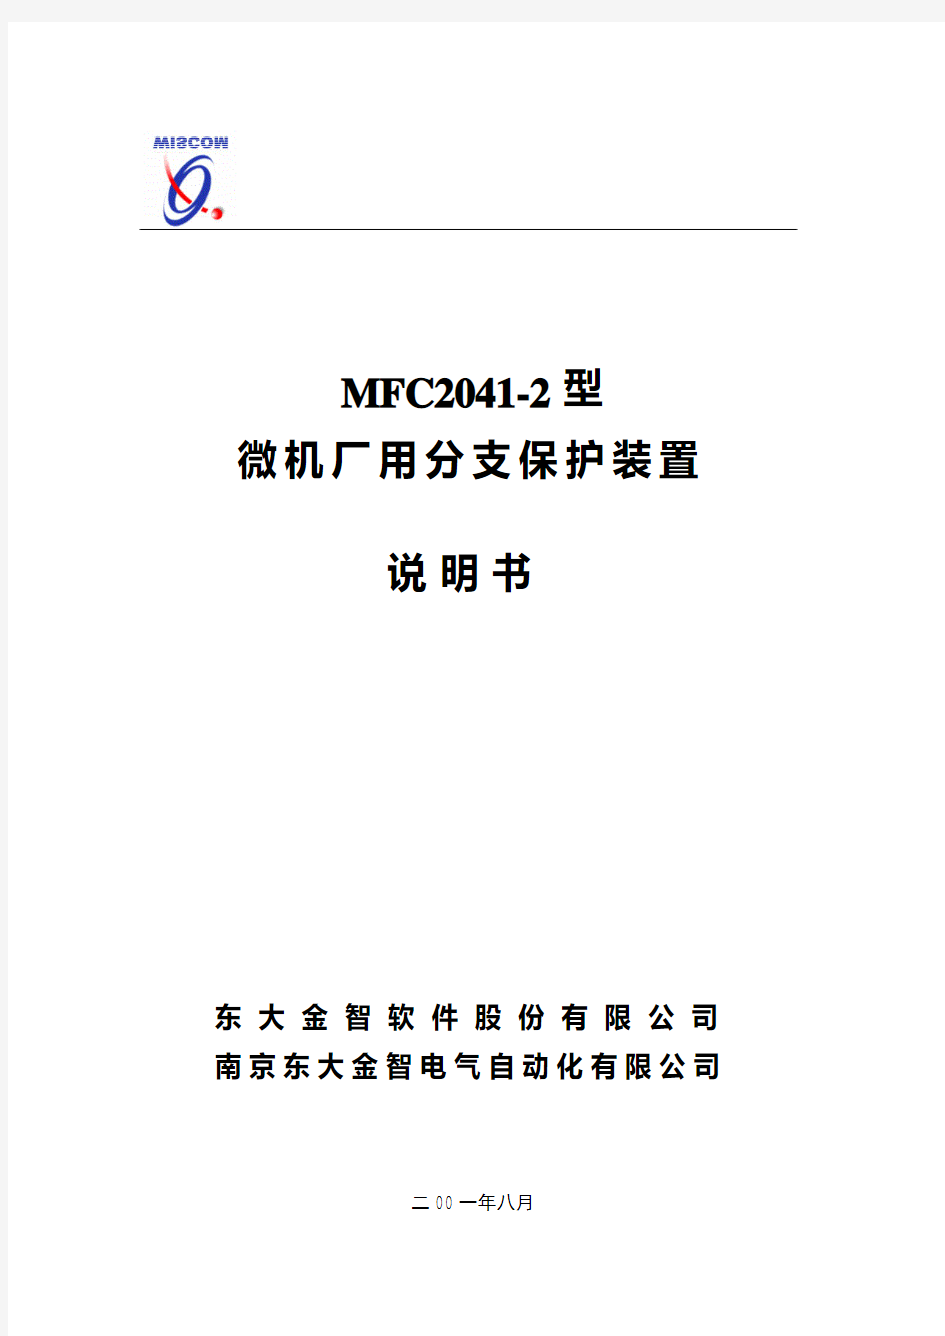 mfc2041-2